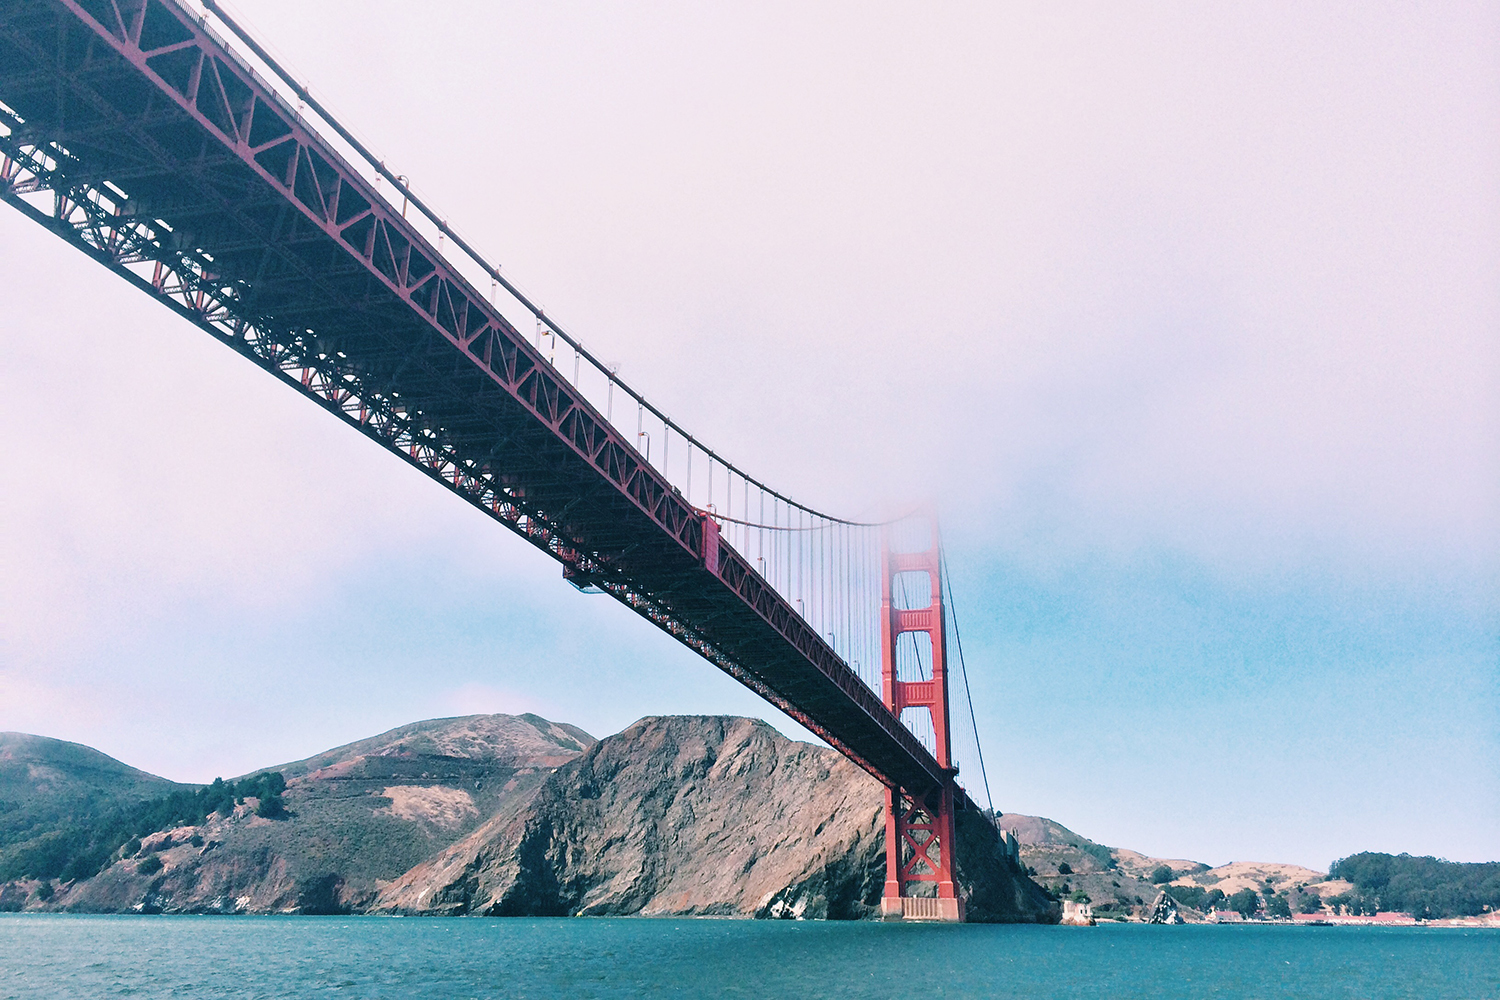 <span style="font-weight: bold;">Golden Gate Bridge</span><br>